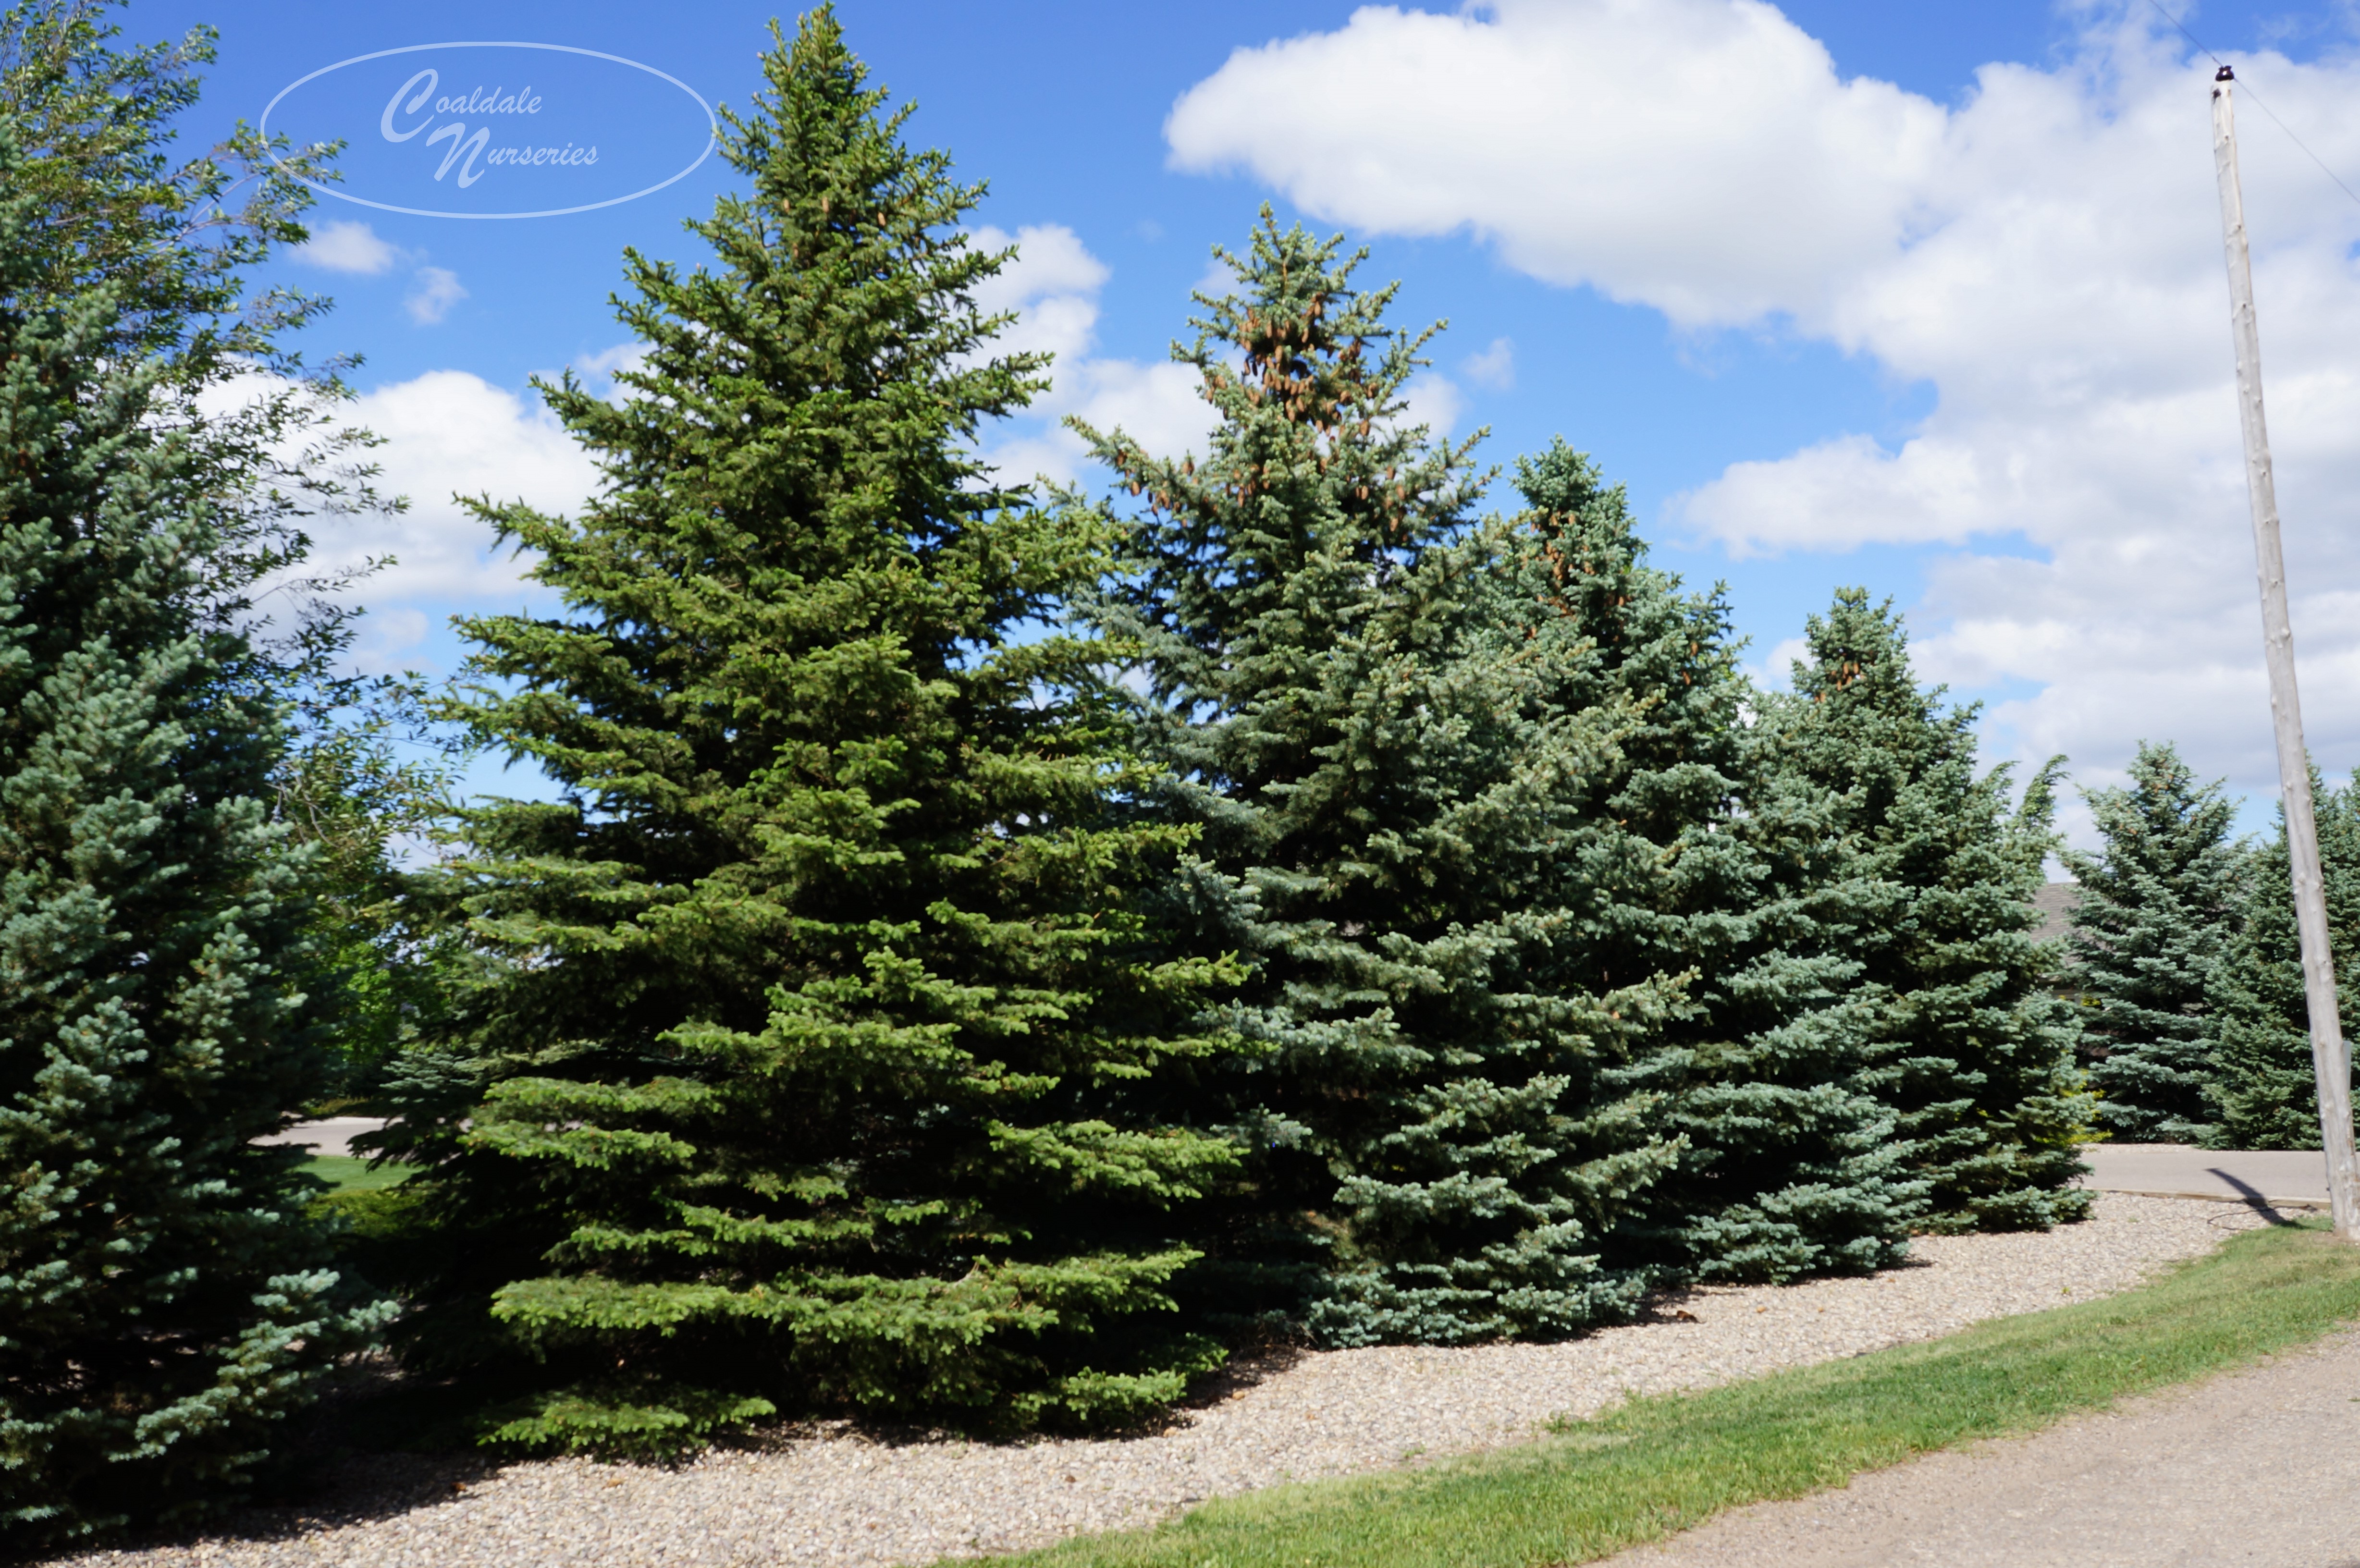 Colorado Spruce (Green or Blue) Image